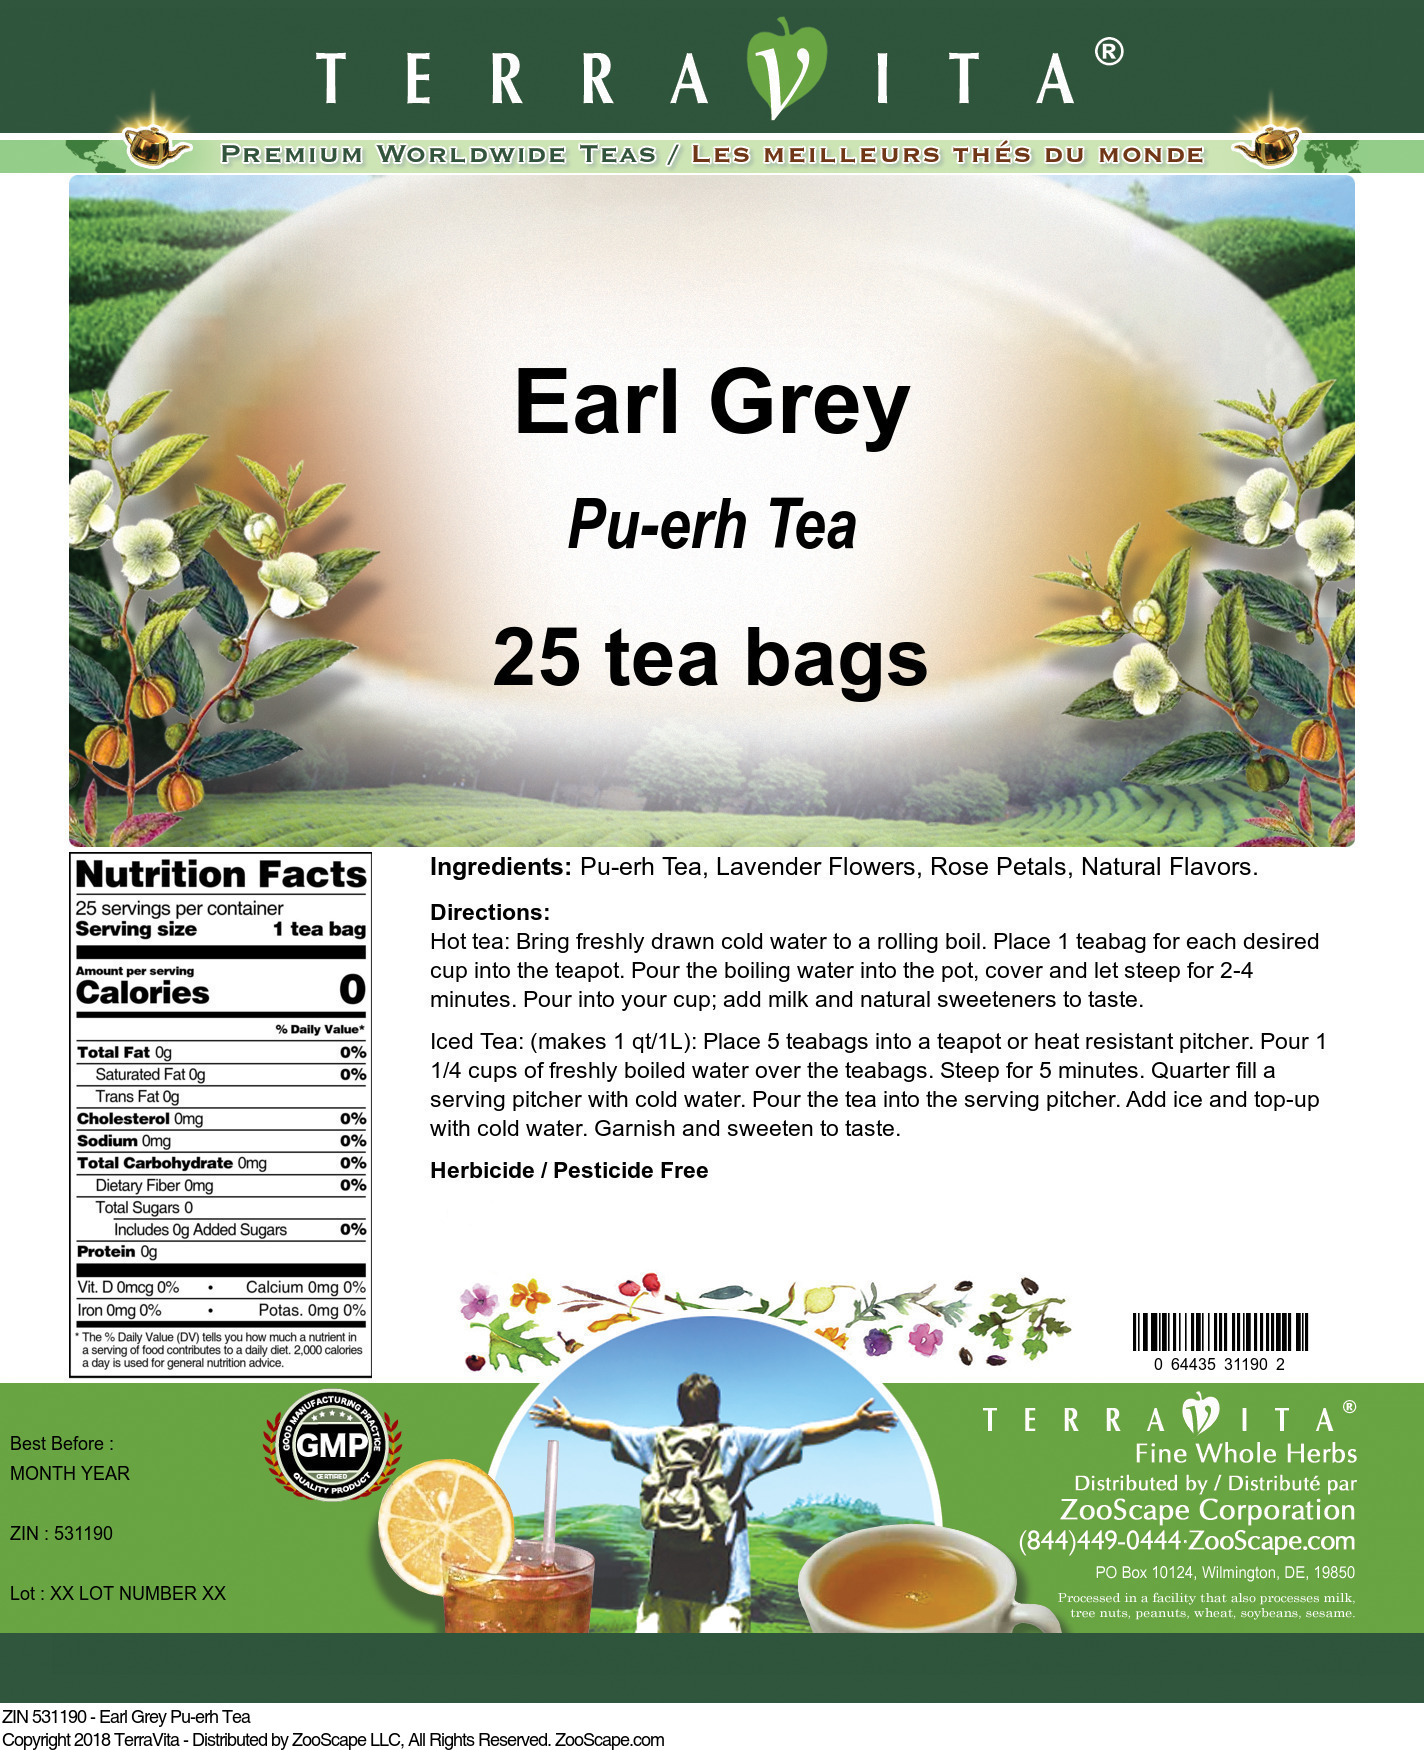 Earl Grey Pu-erh Tea - Label